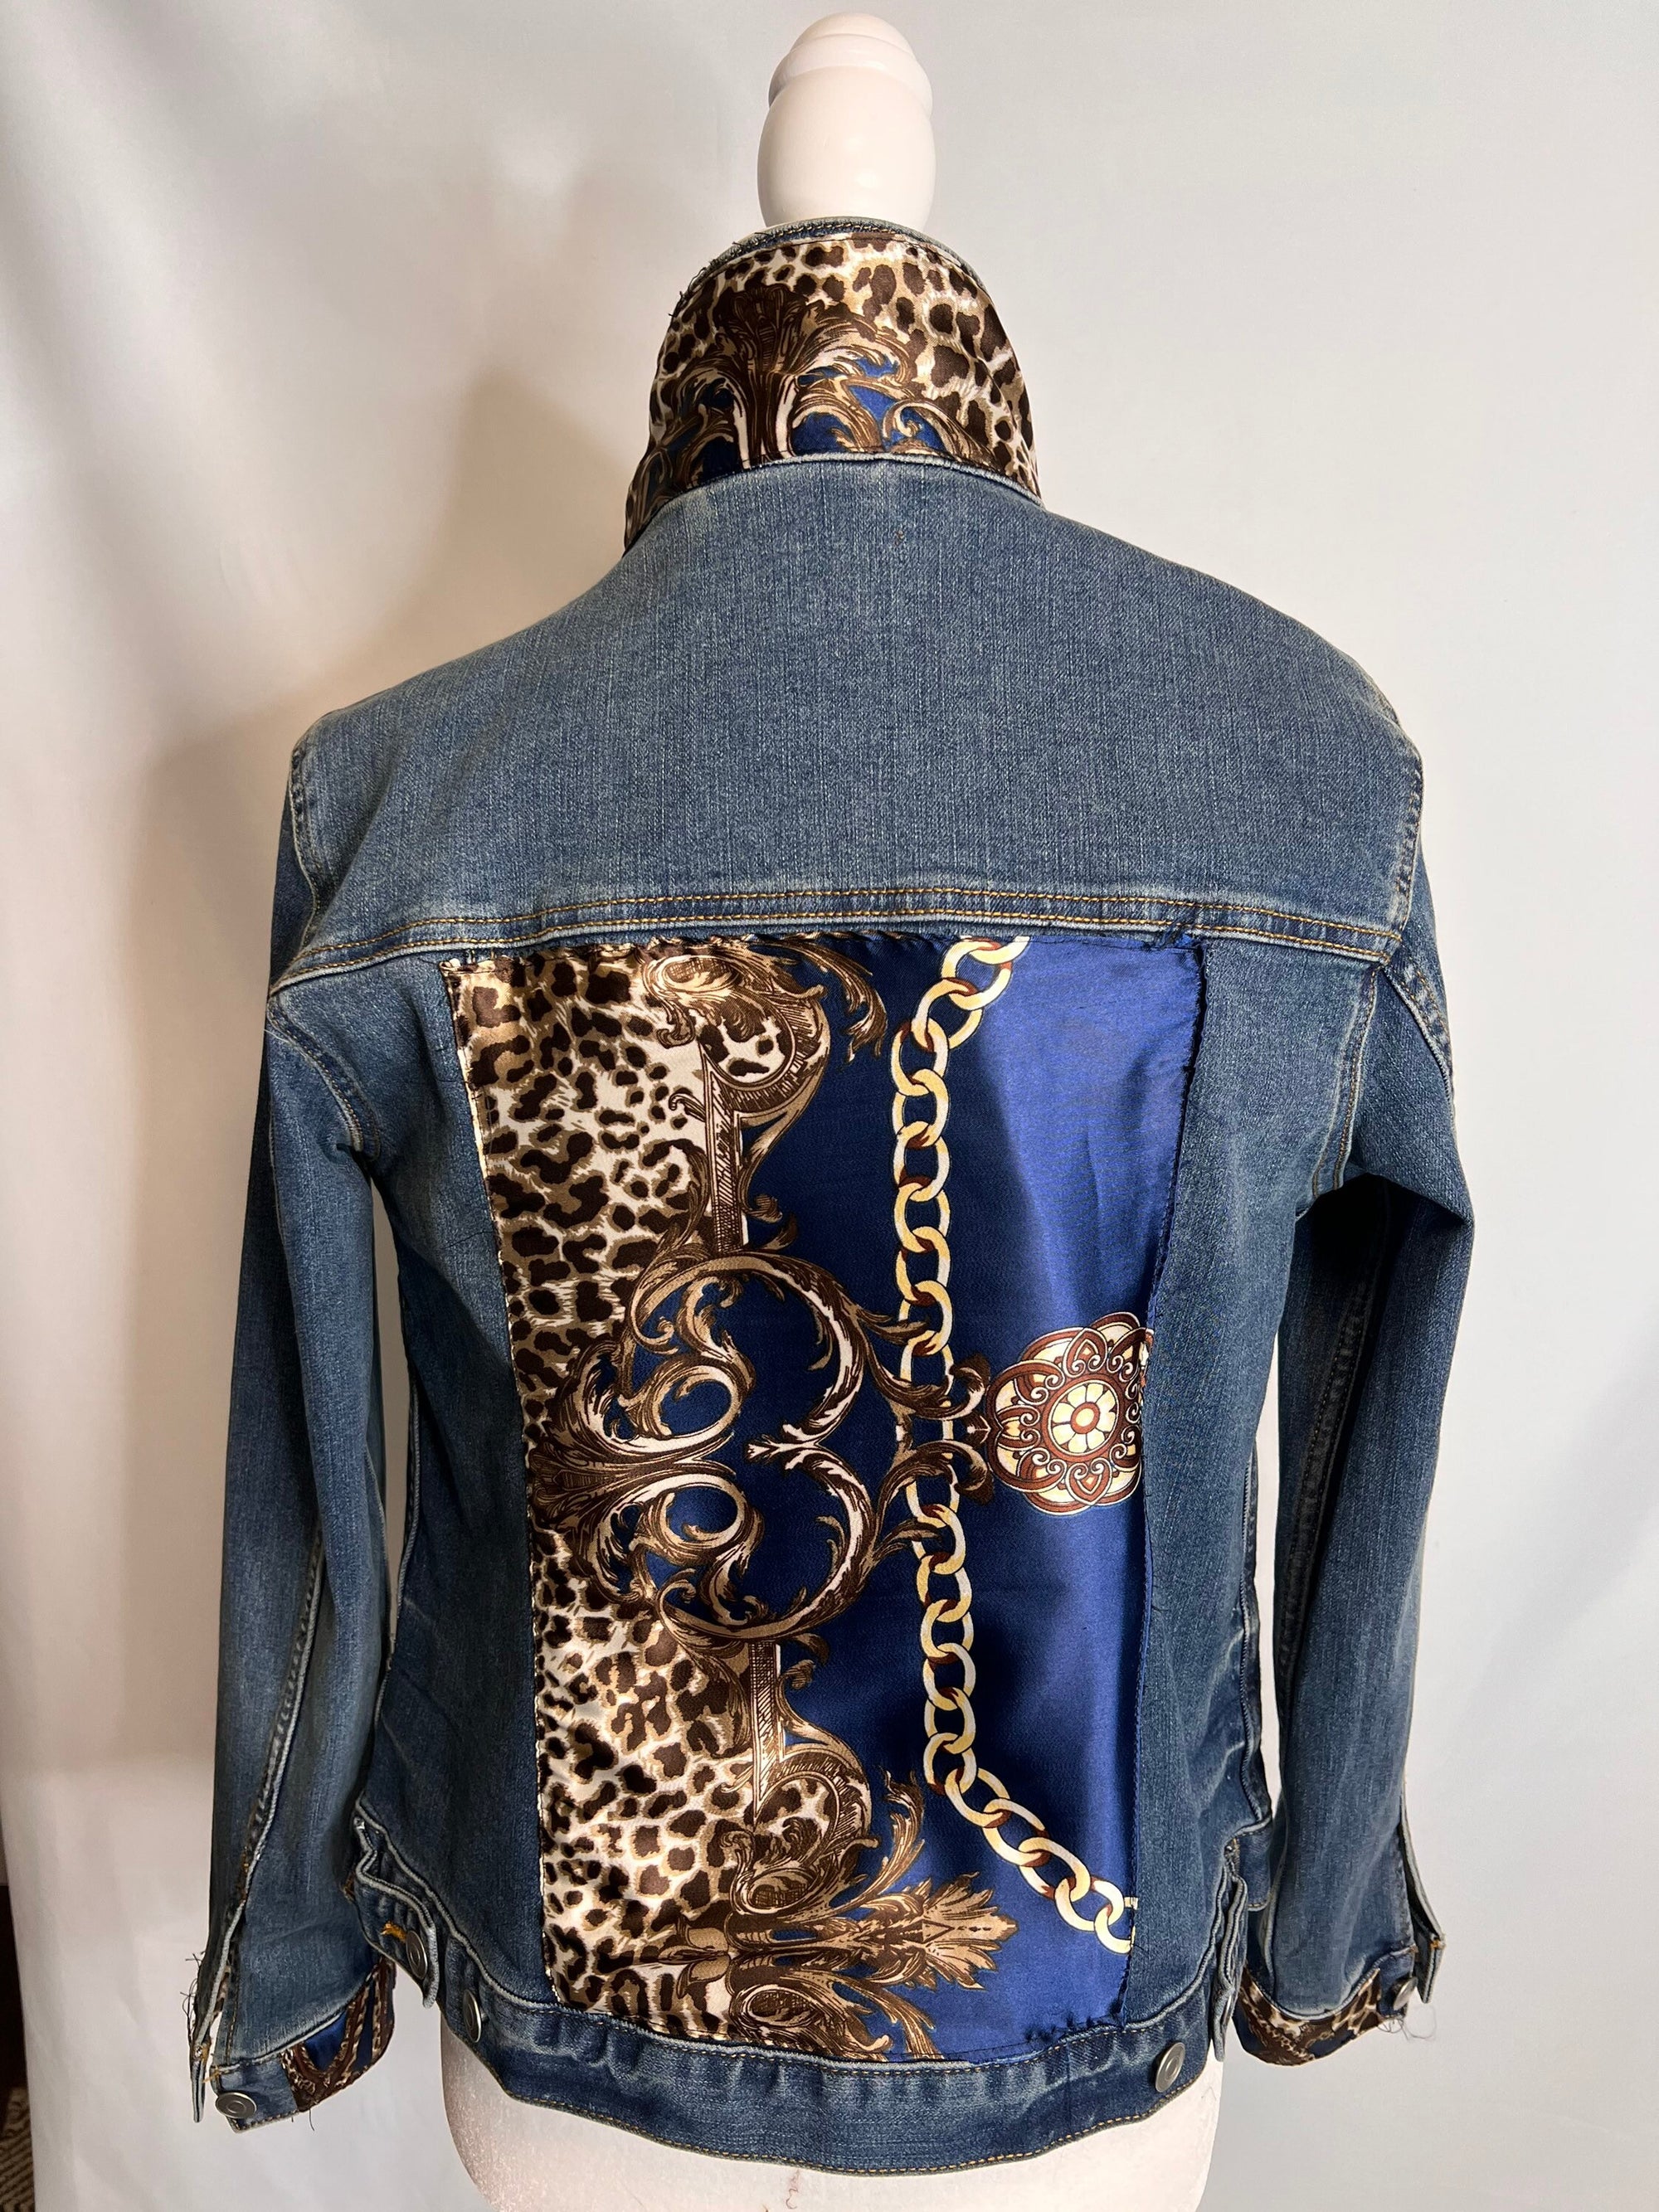 Blue, Gold and Leopard Print Scarf on  Denim Jacket